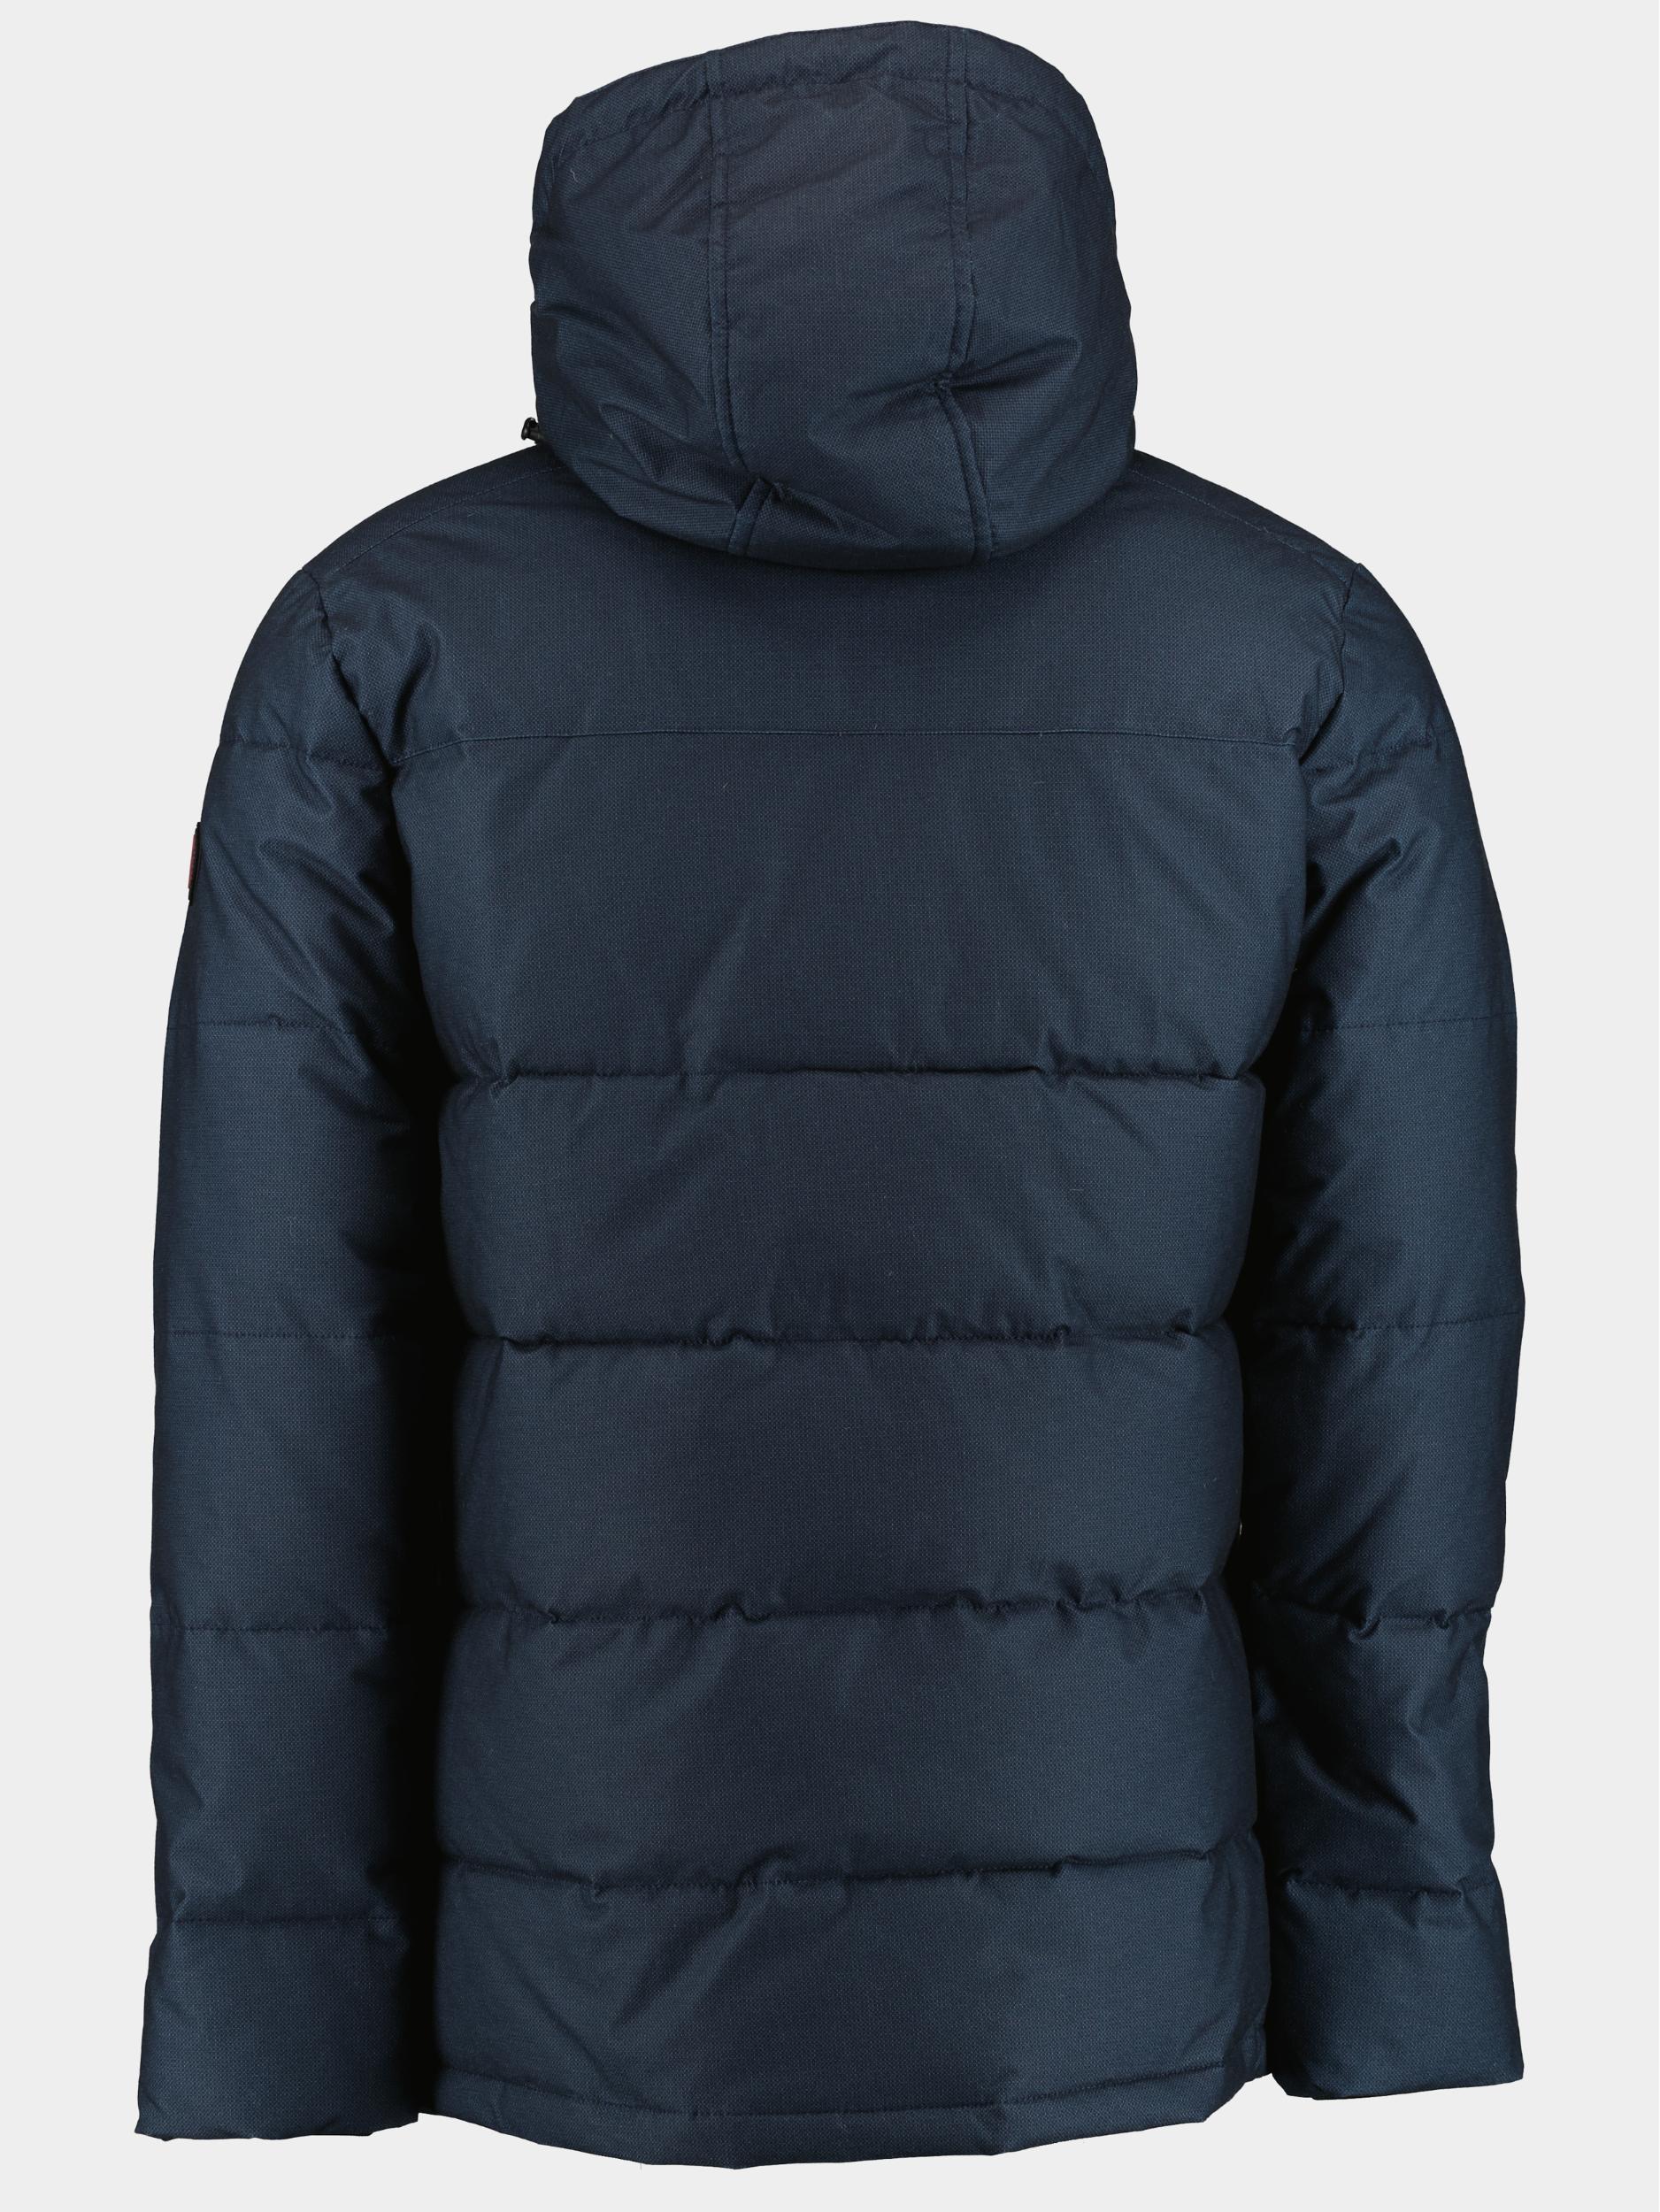 Donders 1860 Winterjack Blauw Textile jacket 21822/771